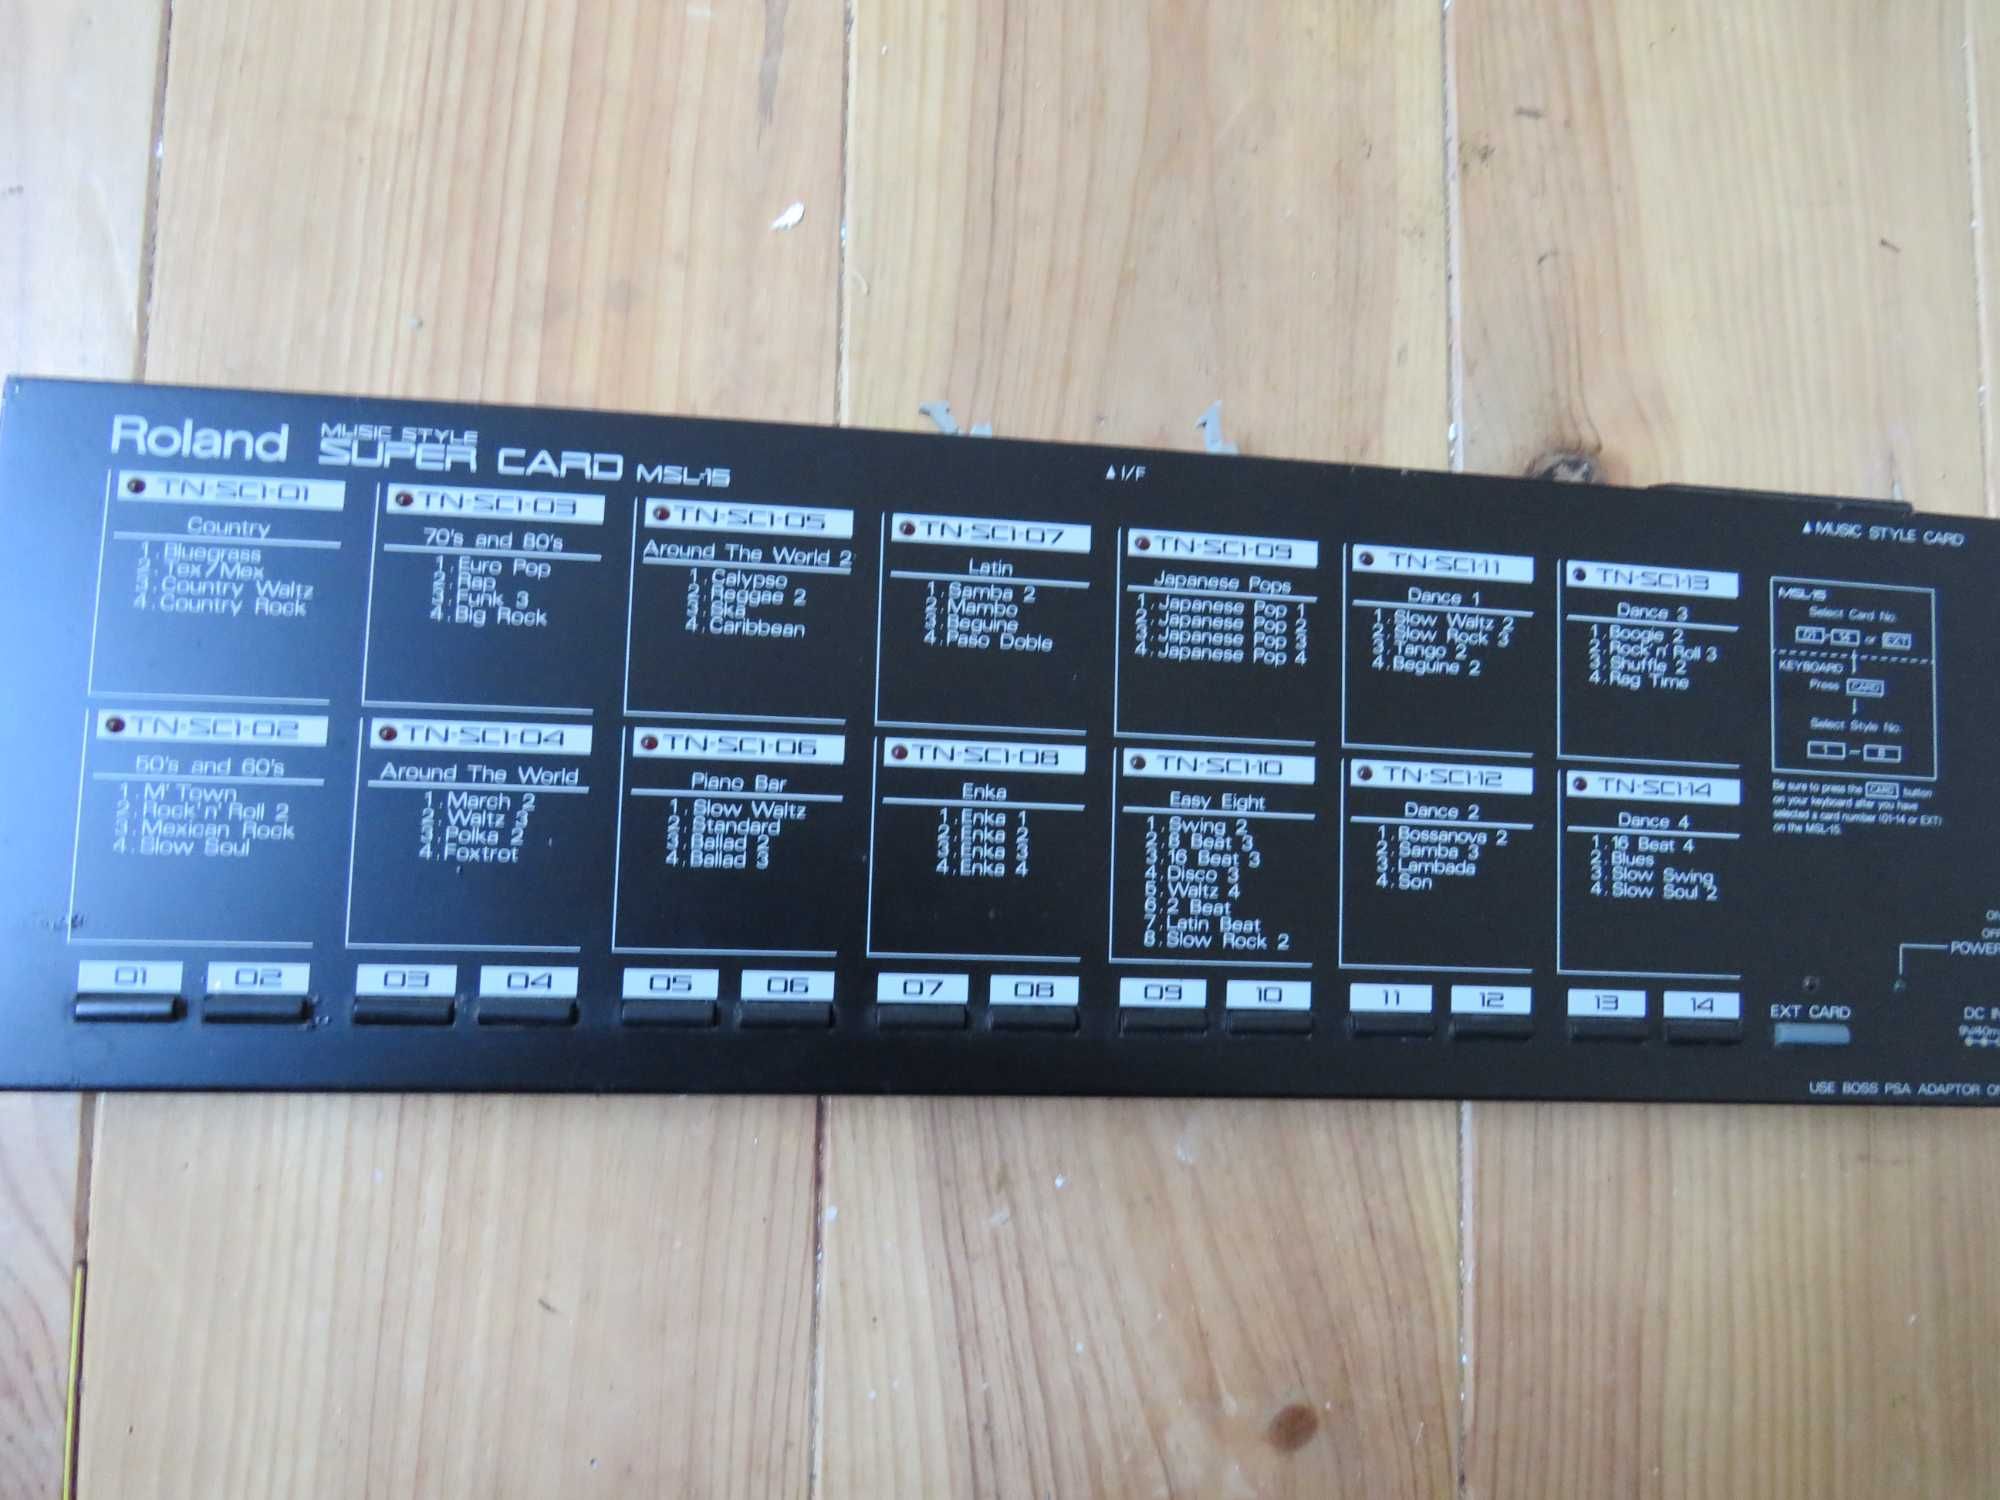 Roland SUPER CARD MSL - 15 MODULO de sons Synth antigo/ vintage